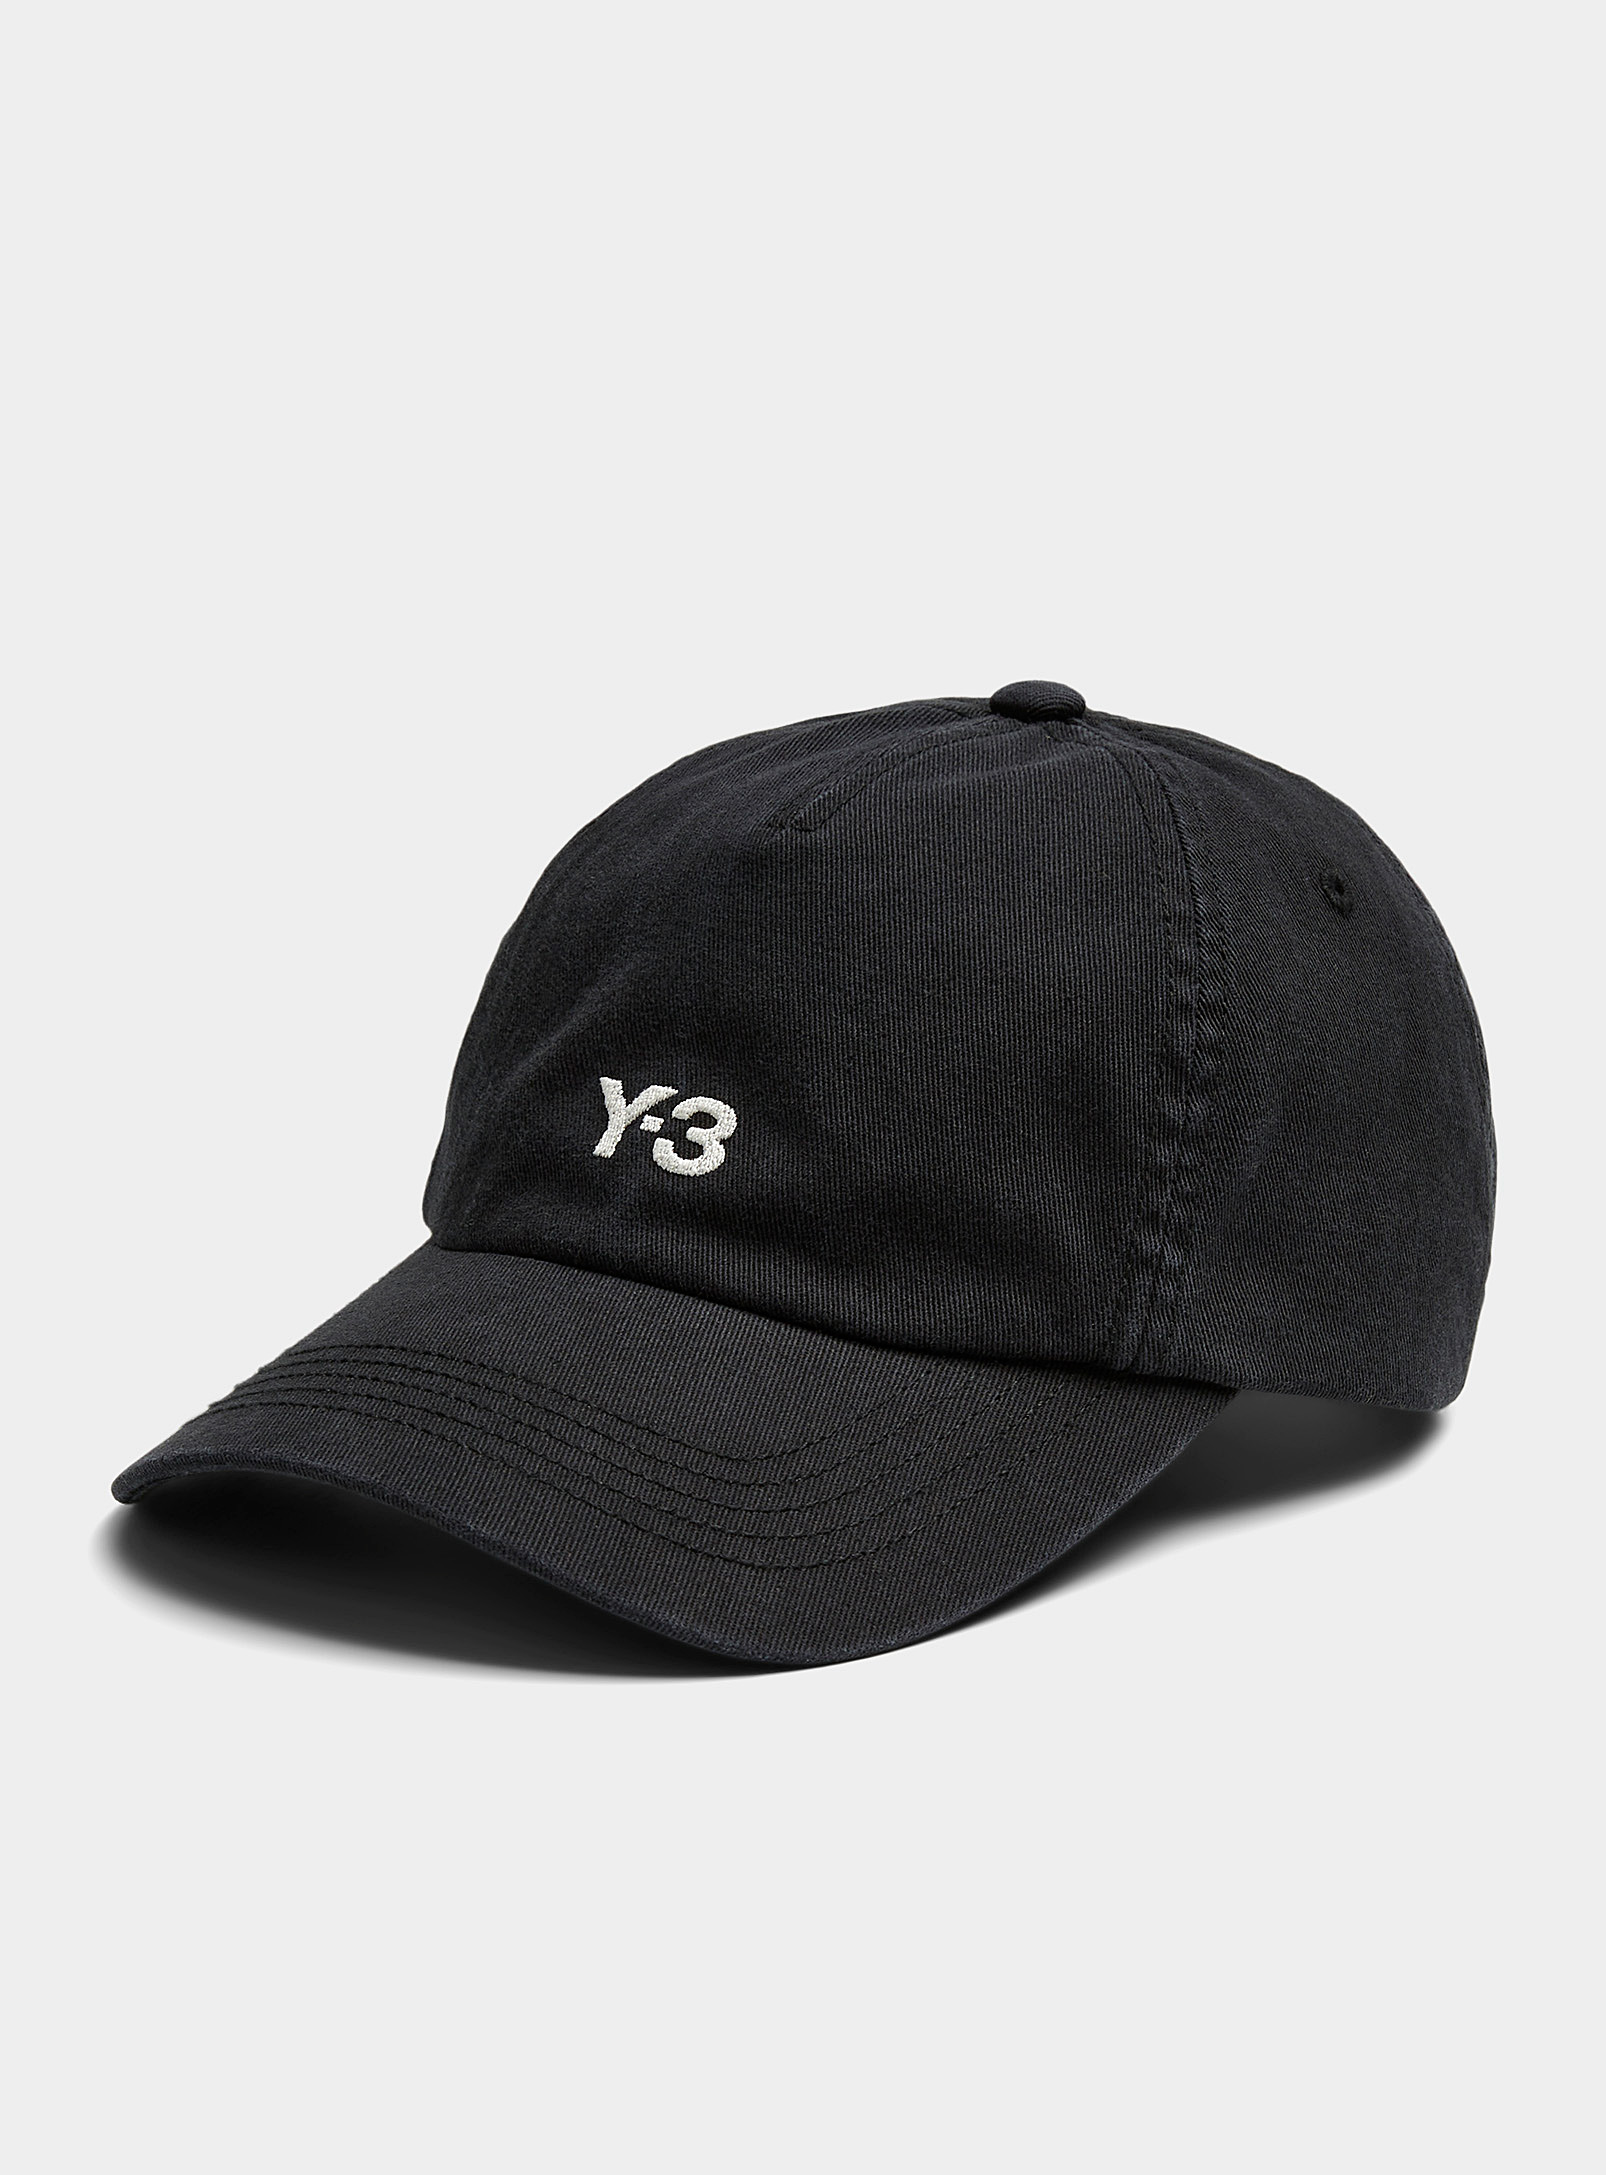 Y-3 - La casquette baseball noire Y-3 brodée